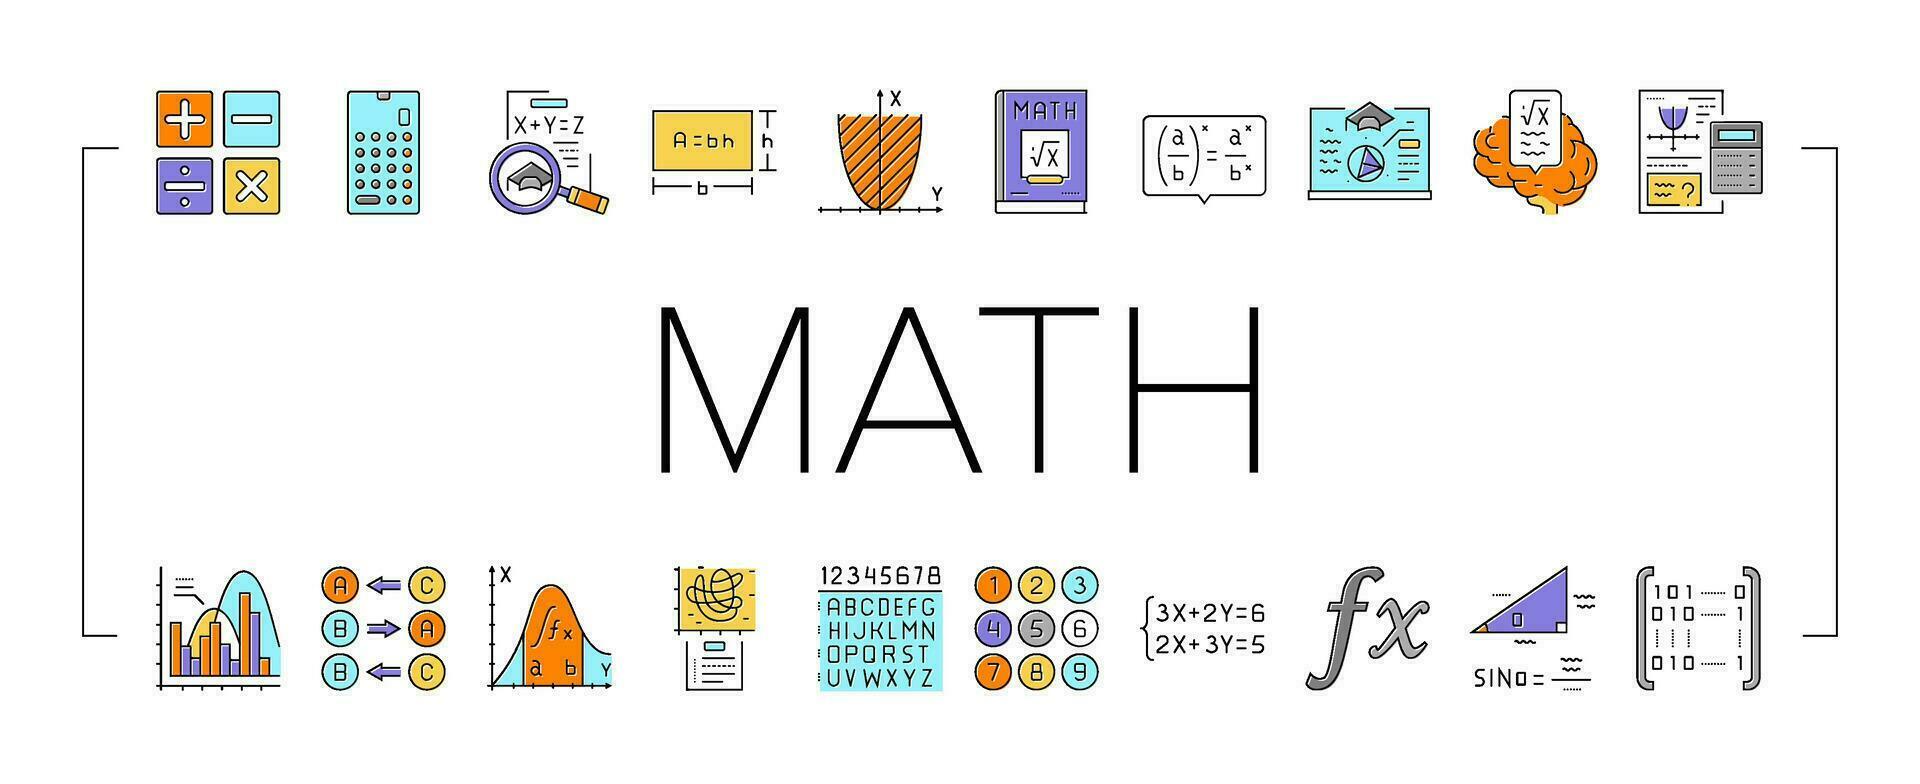 math education school science icons set vector